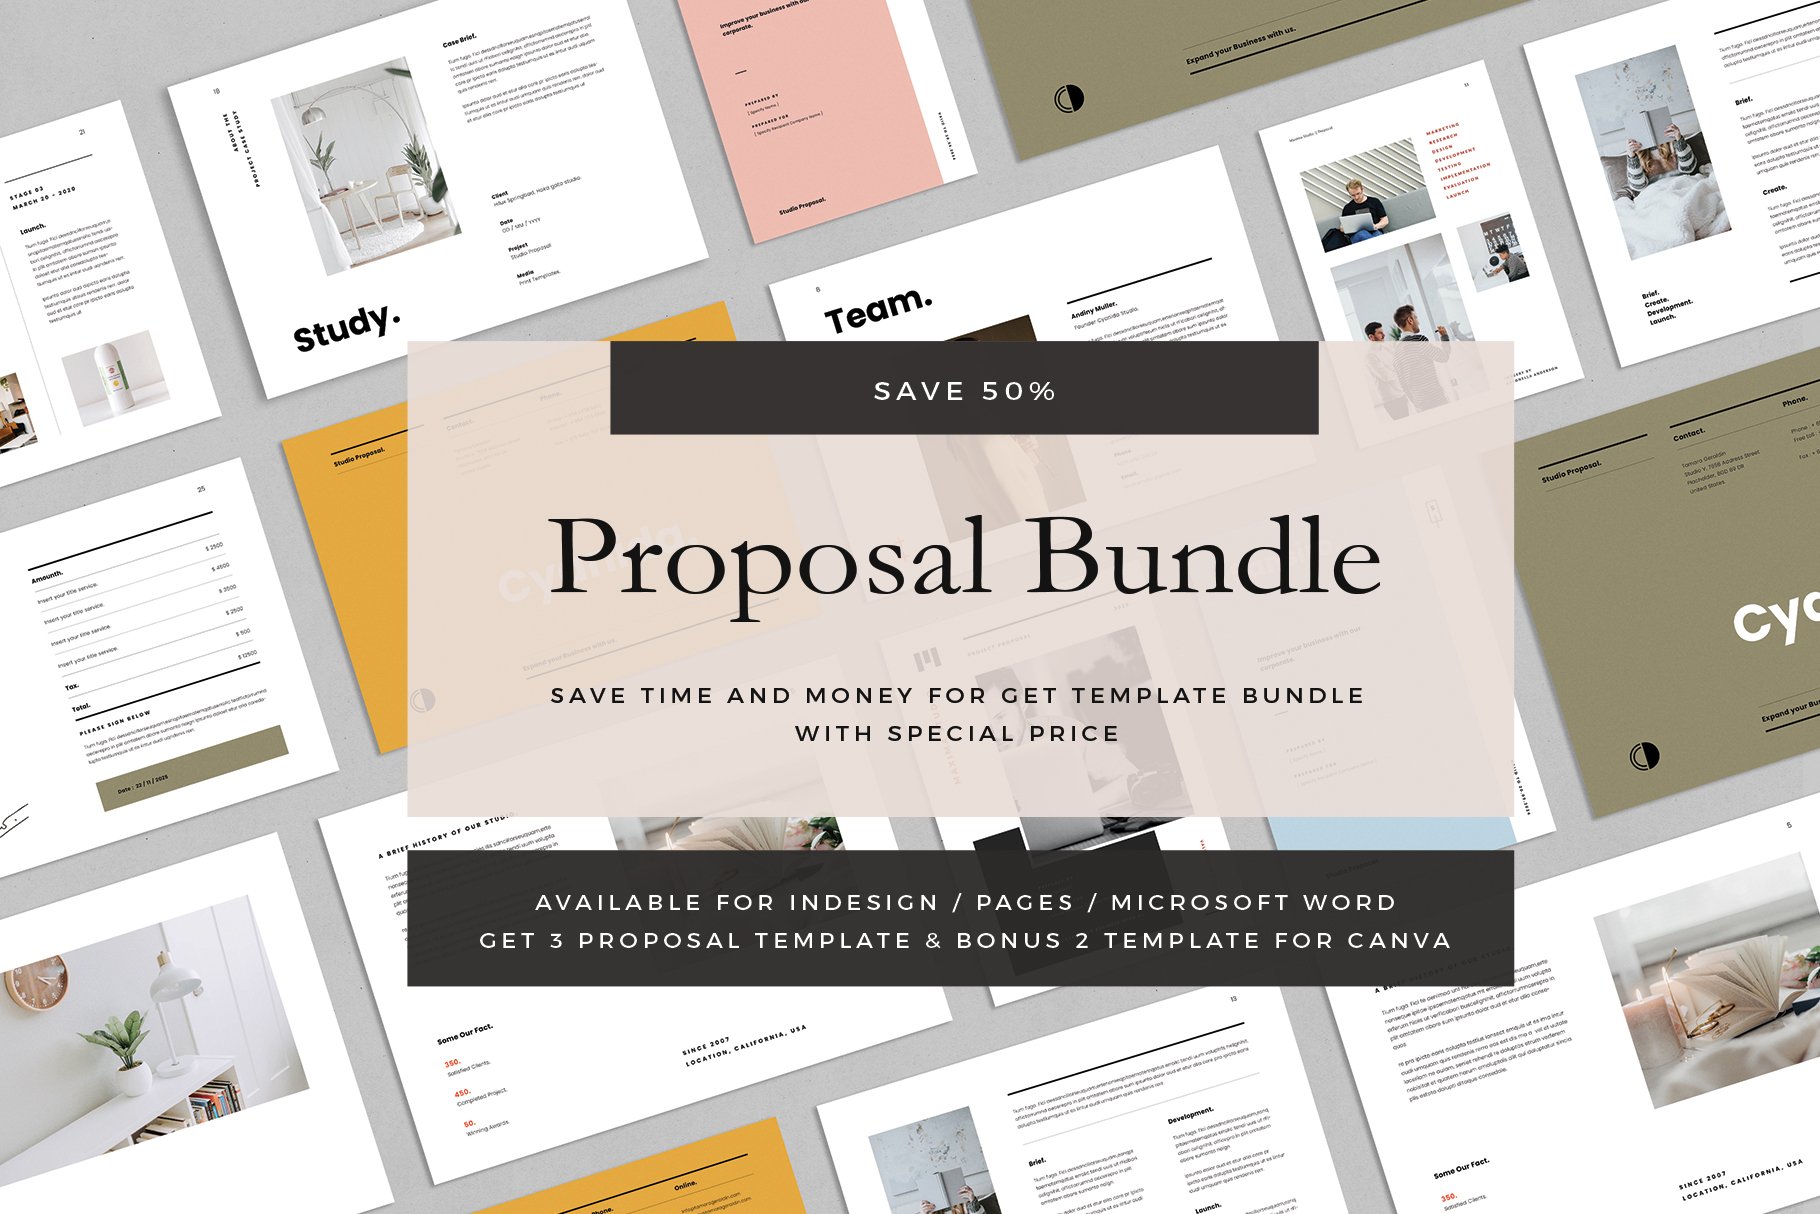 Proposal Bundle cover image.